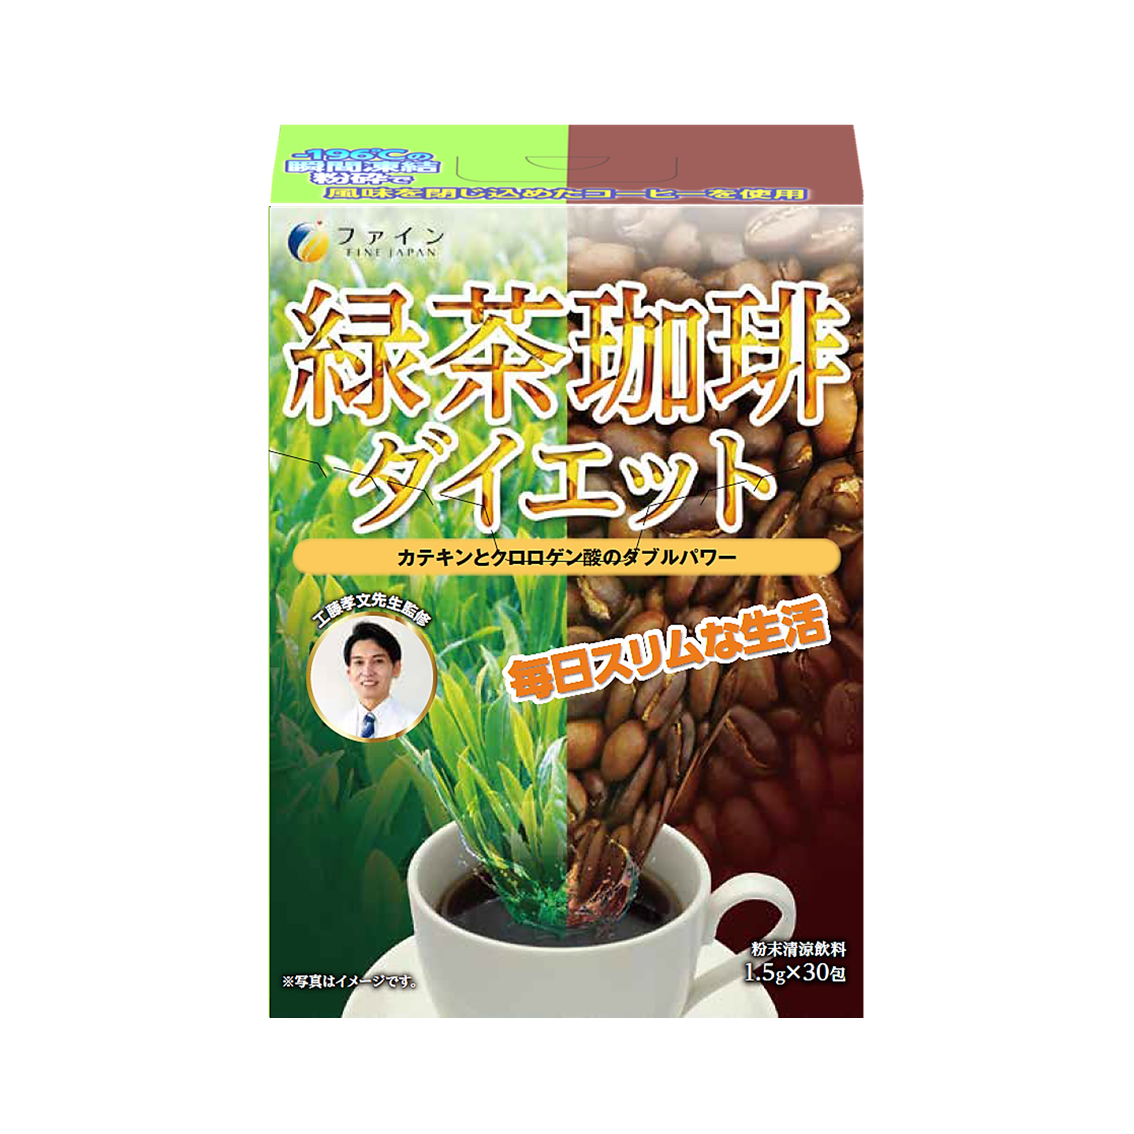 FINE绿茶&瘦身咖啡45G(1.5gx30Sticks)